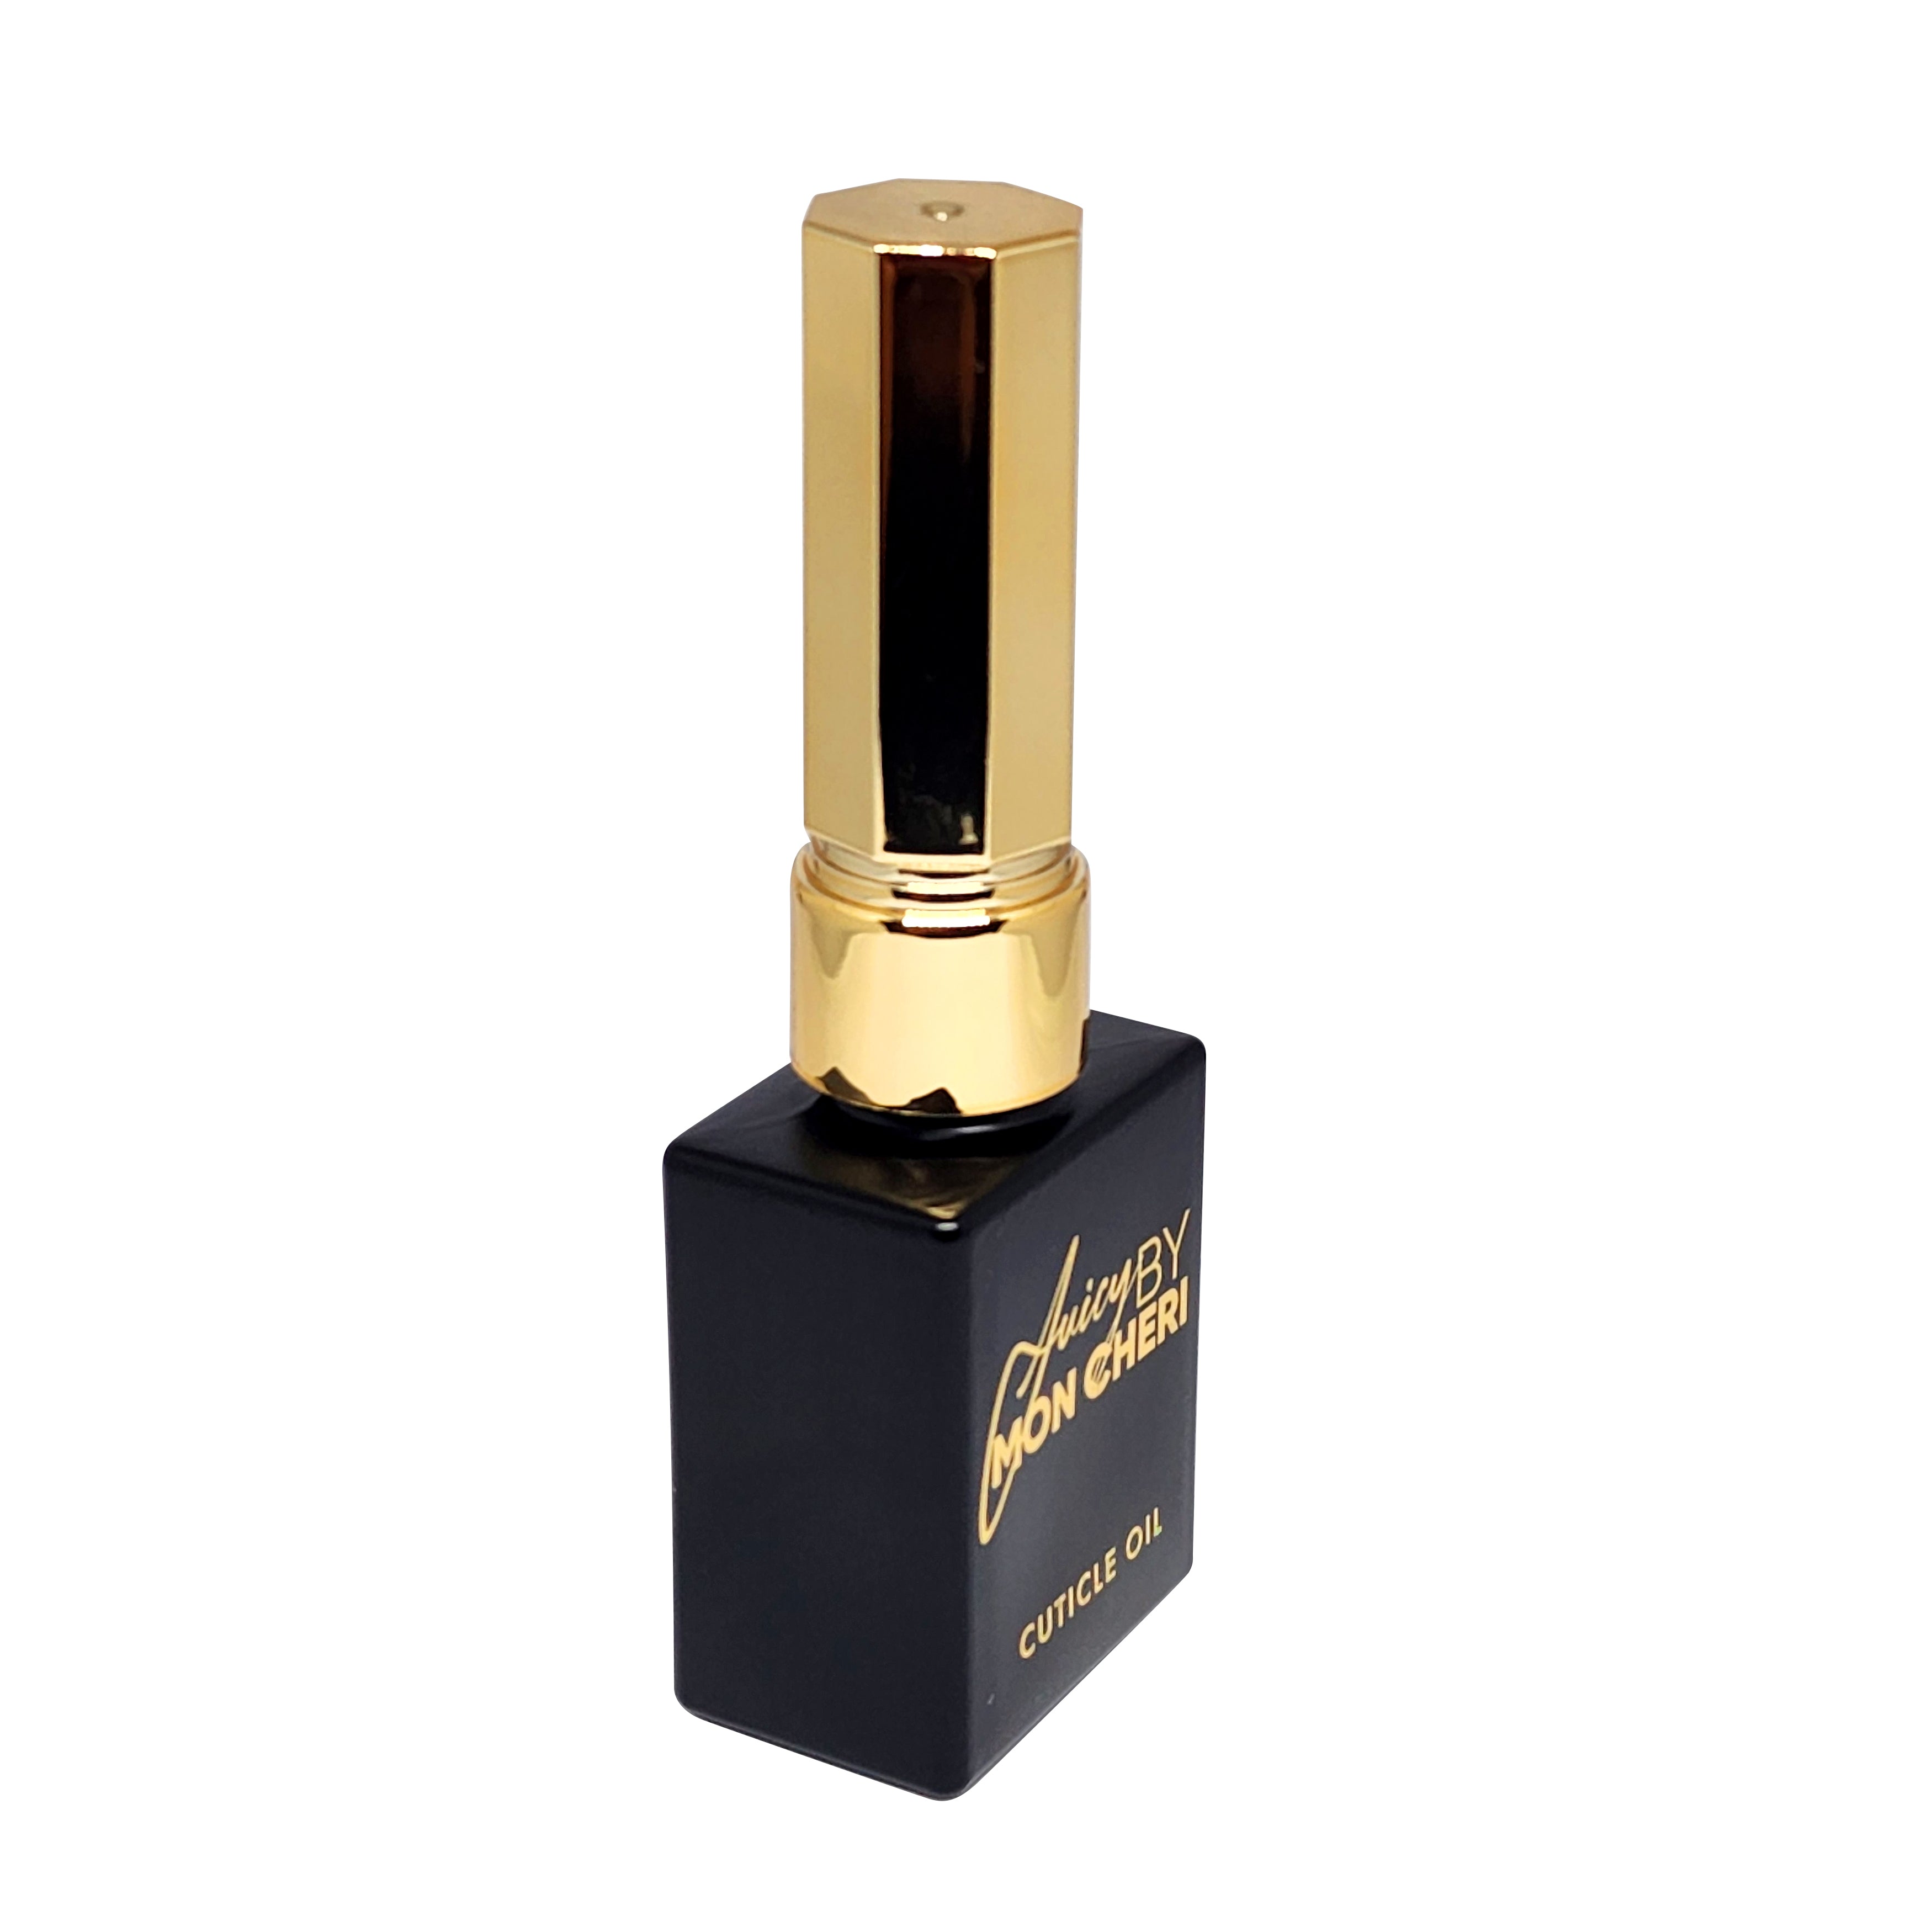 Allure Pheromone cuticle oil ( Golden Touch model) Juicy by Mon Cheri